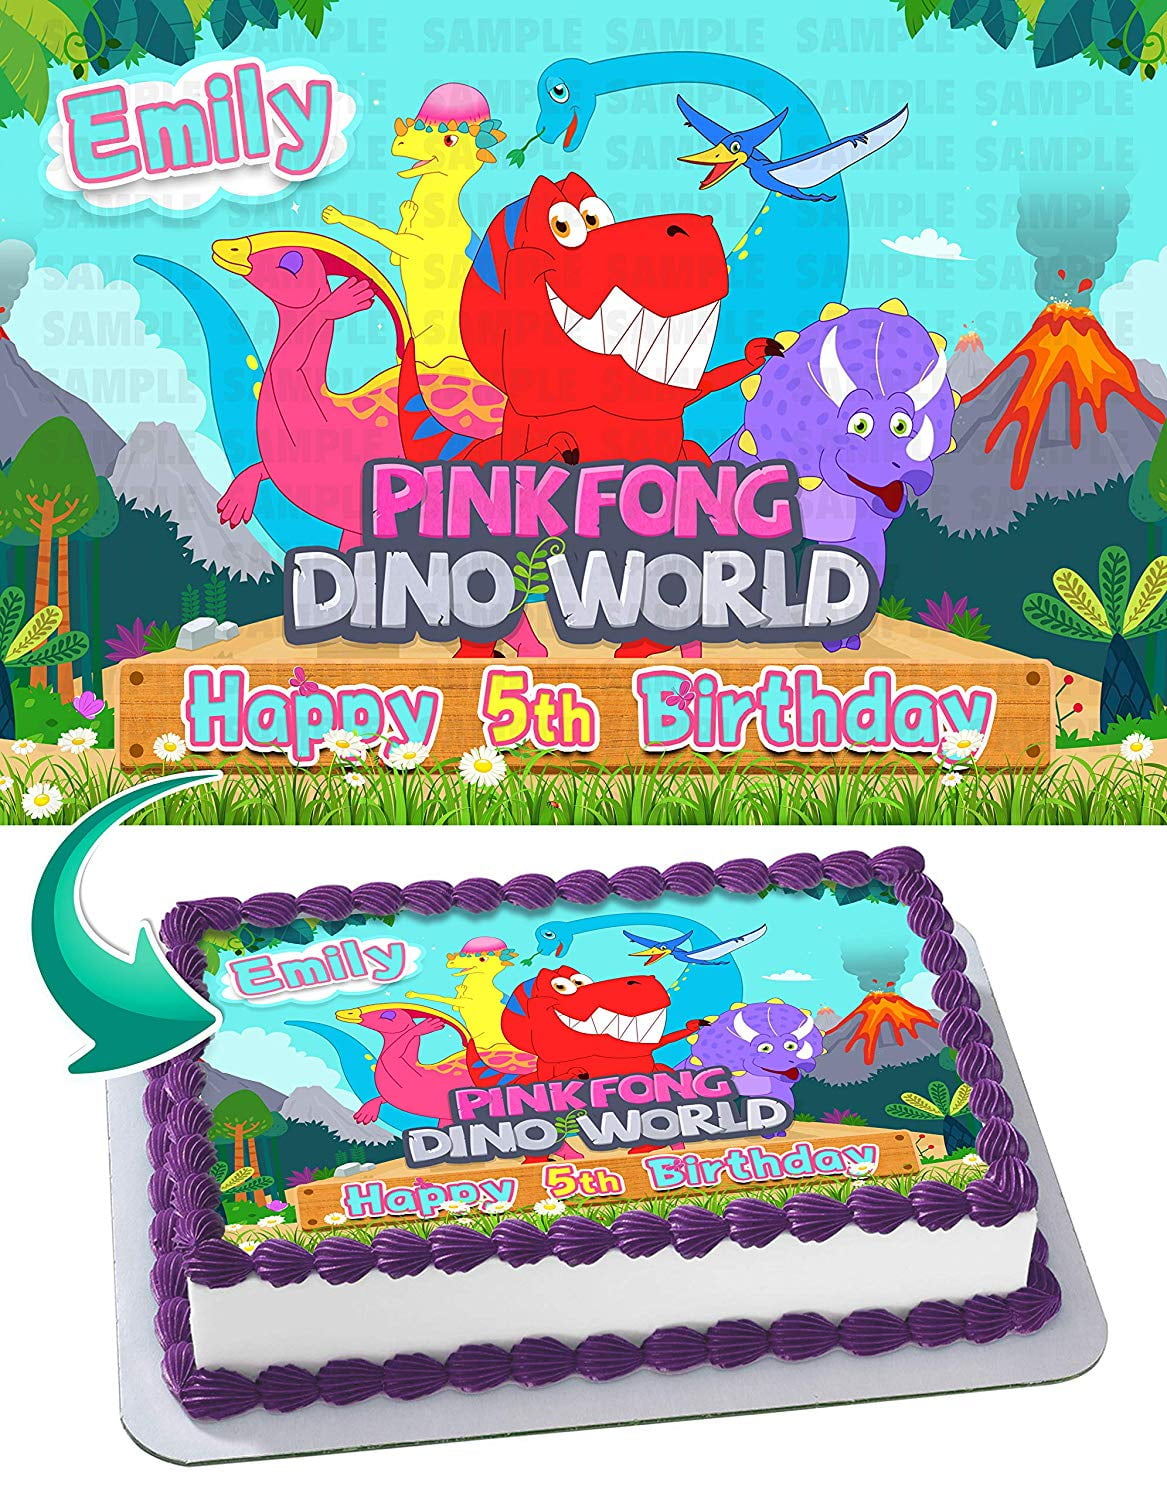 Baby Shark (Pink Fong) Cake - Decorated Cake by Nikita - CakesDecor